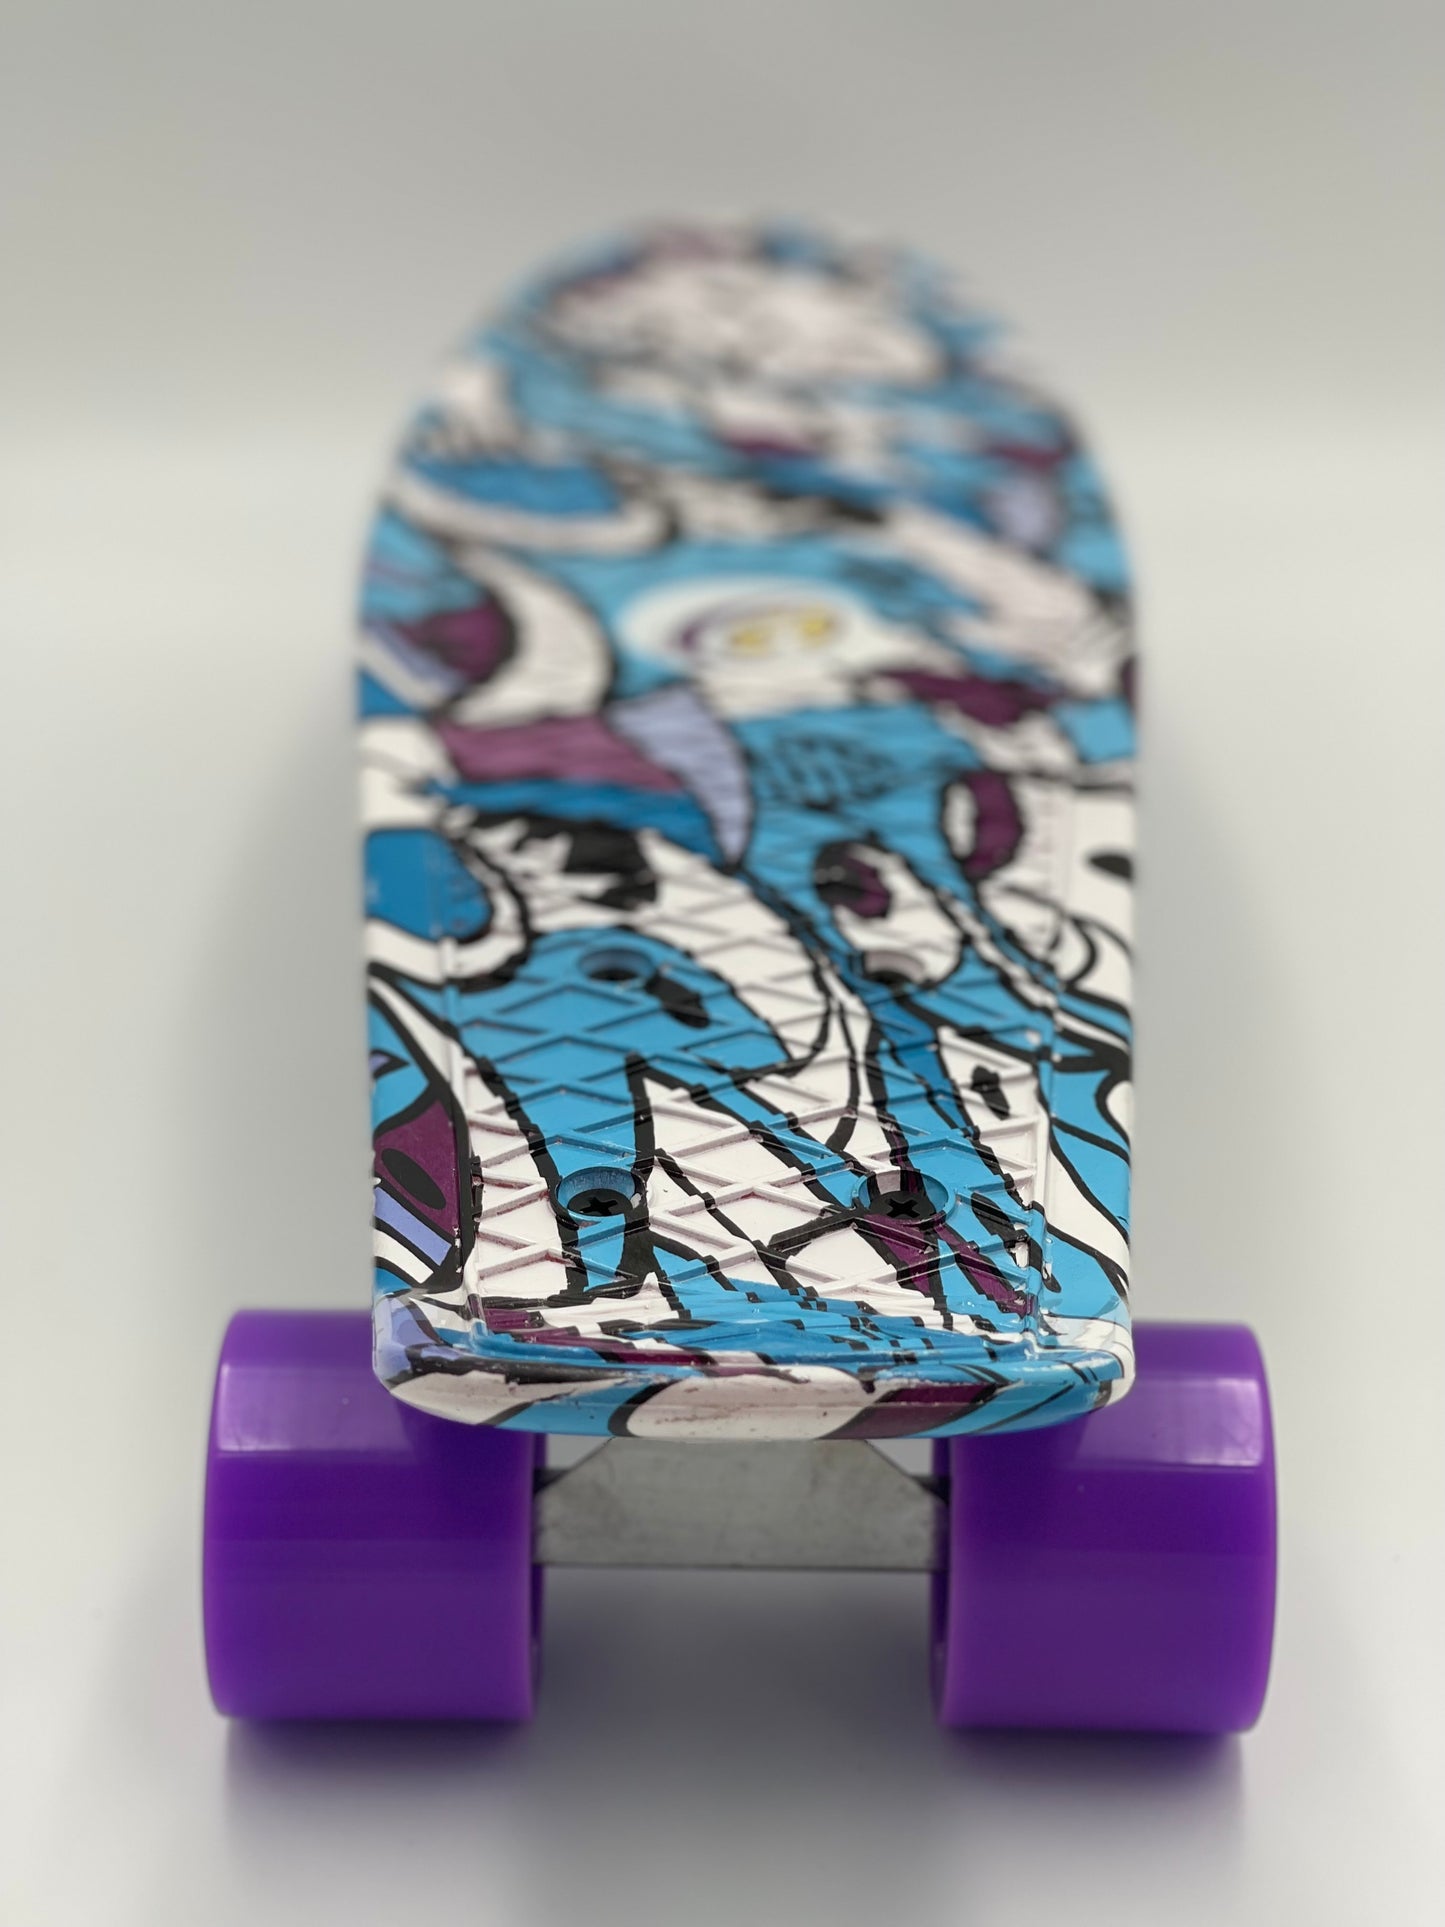 Penny Blu Pablo Omni Skateboard